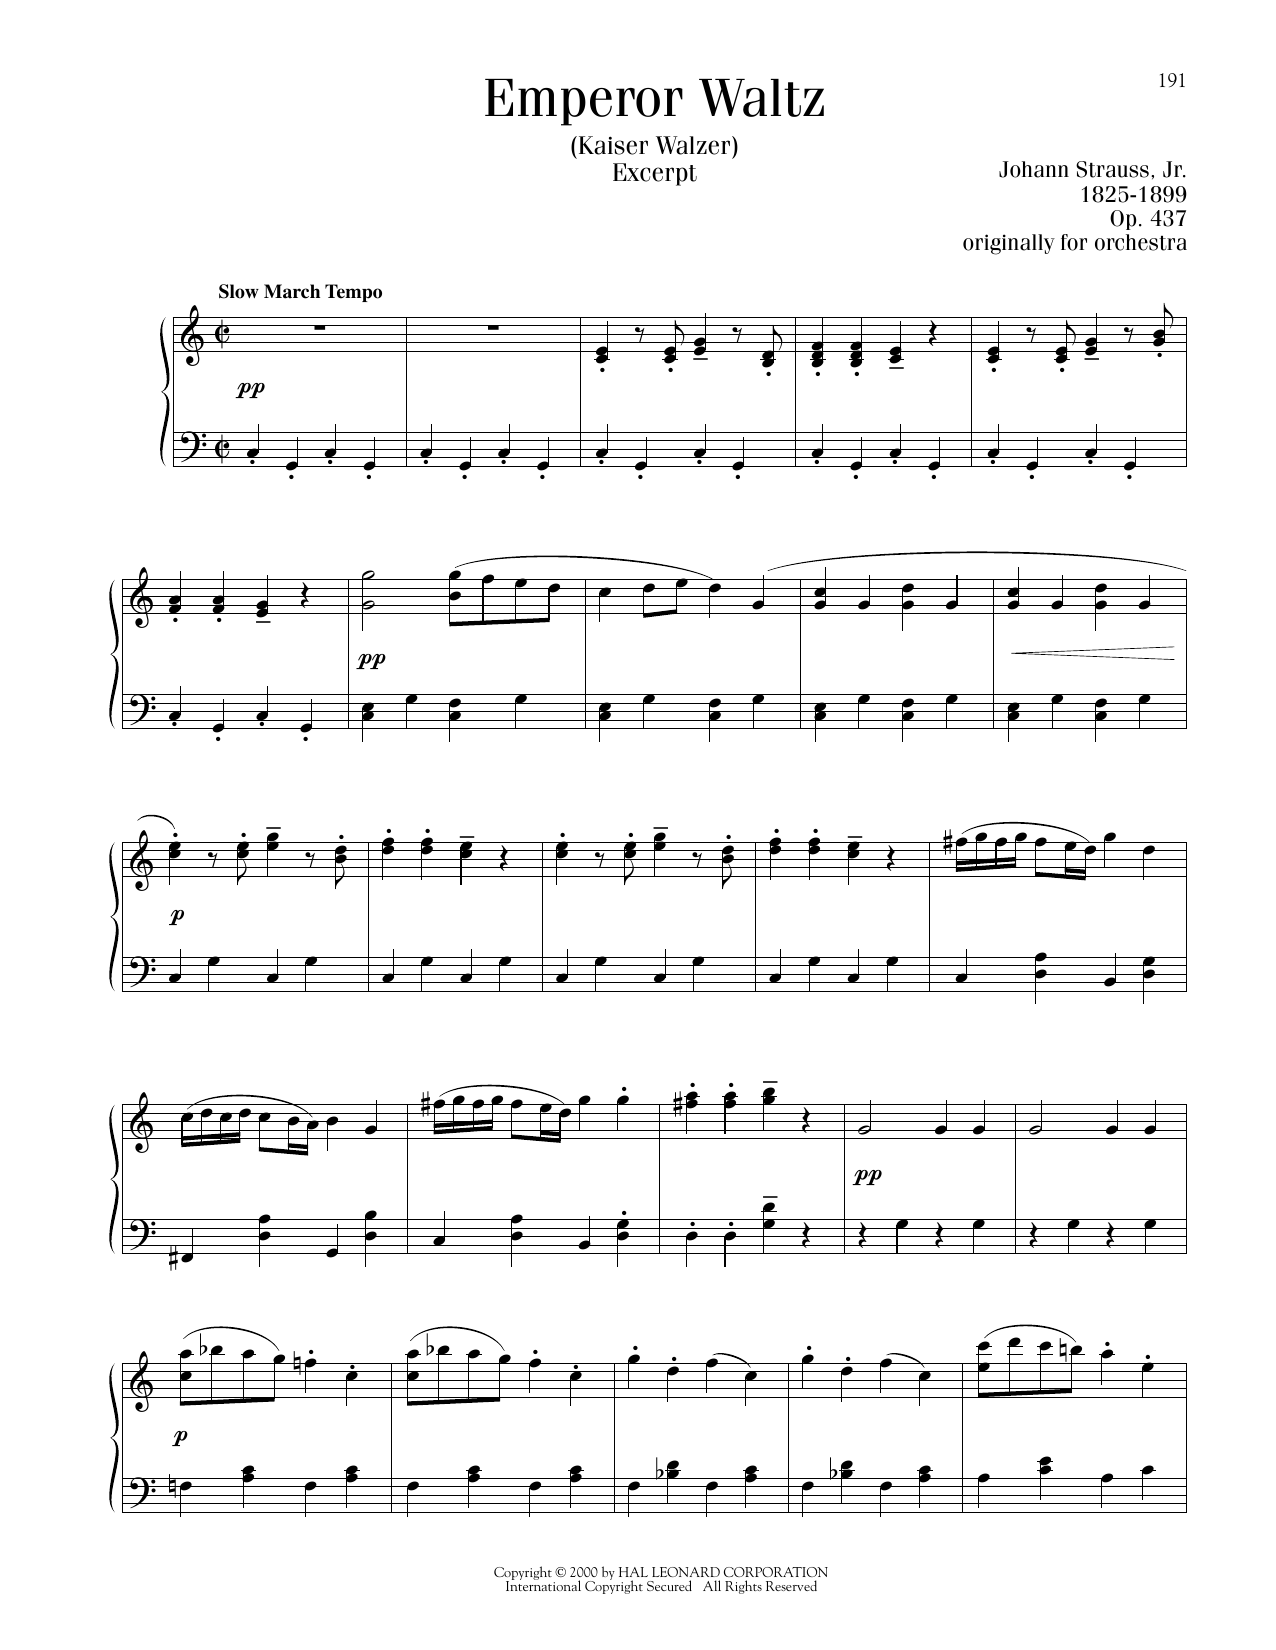 Johann Strauss II Emperor Waltz, Op. 437 sheet music notes printable PDF score